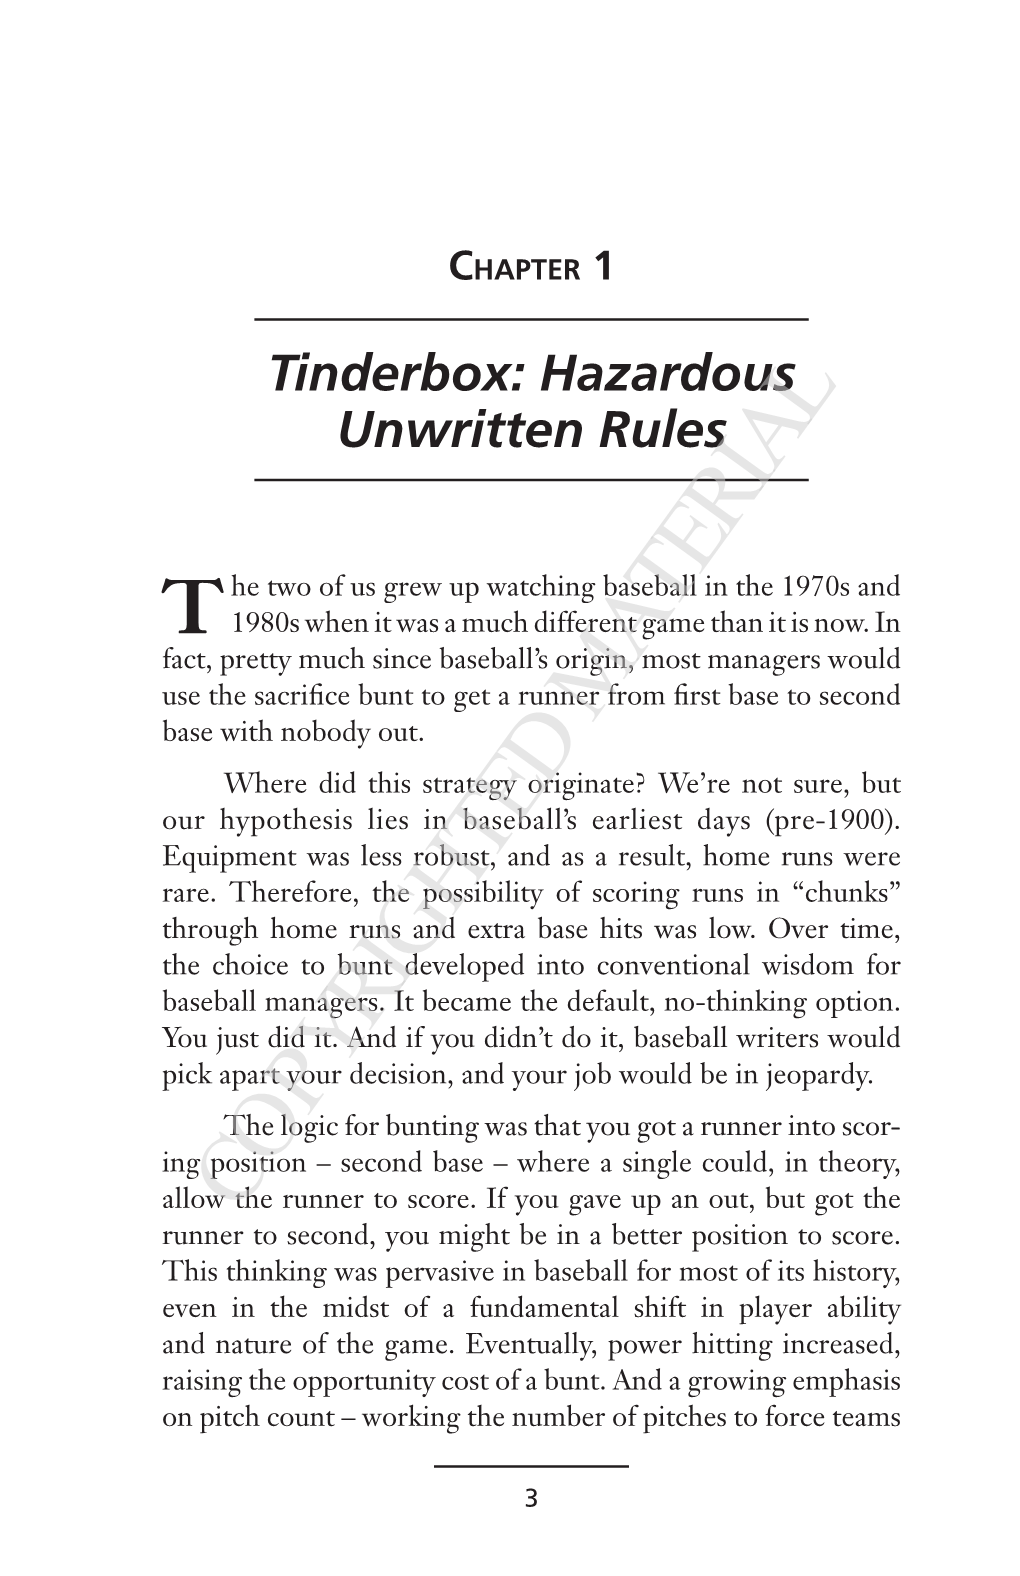 Tinderbox: Hazardous Unwritten Rules